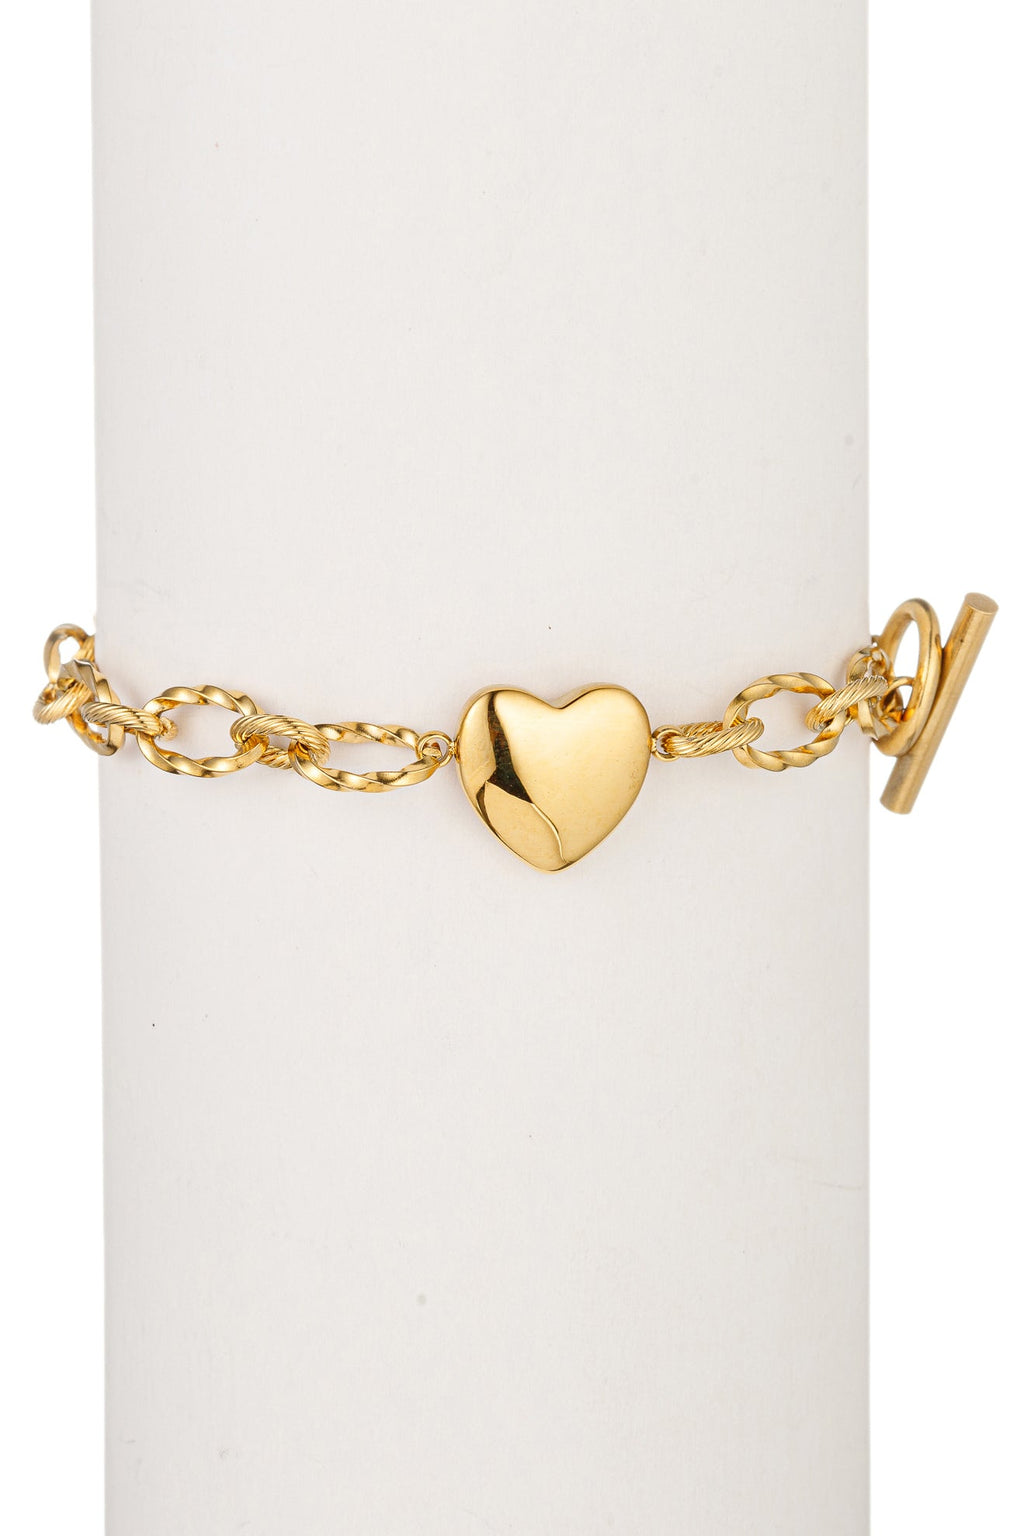 French Heart Chain Bracelet